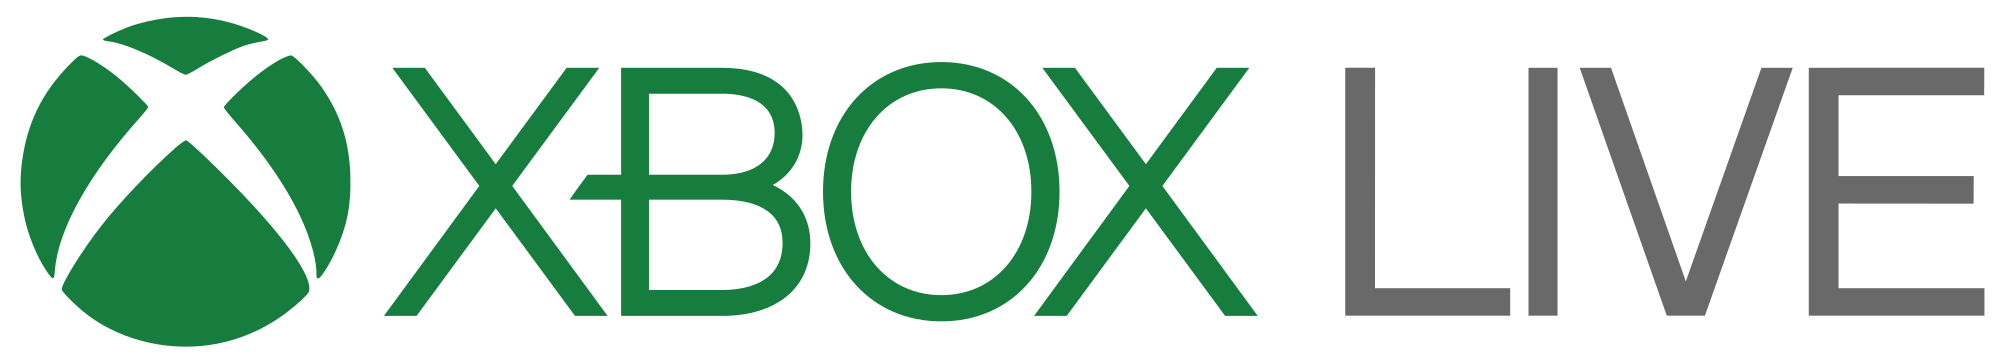 Xbox Live Logo - File:XBox Live logo.svg - Wikimedia Commons